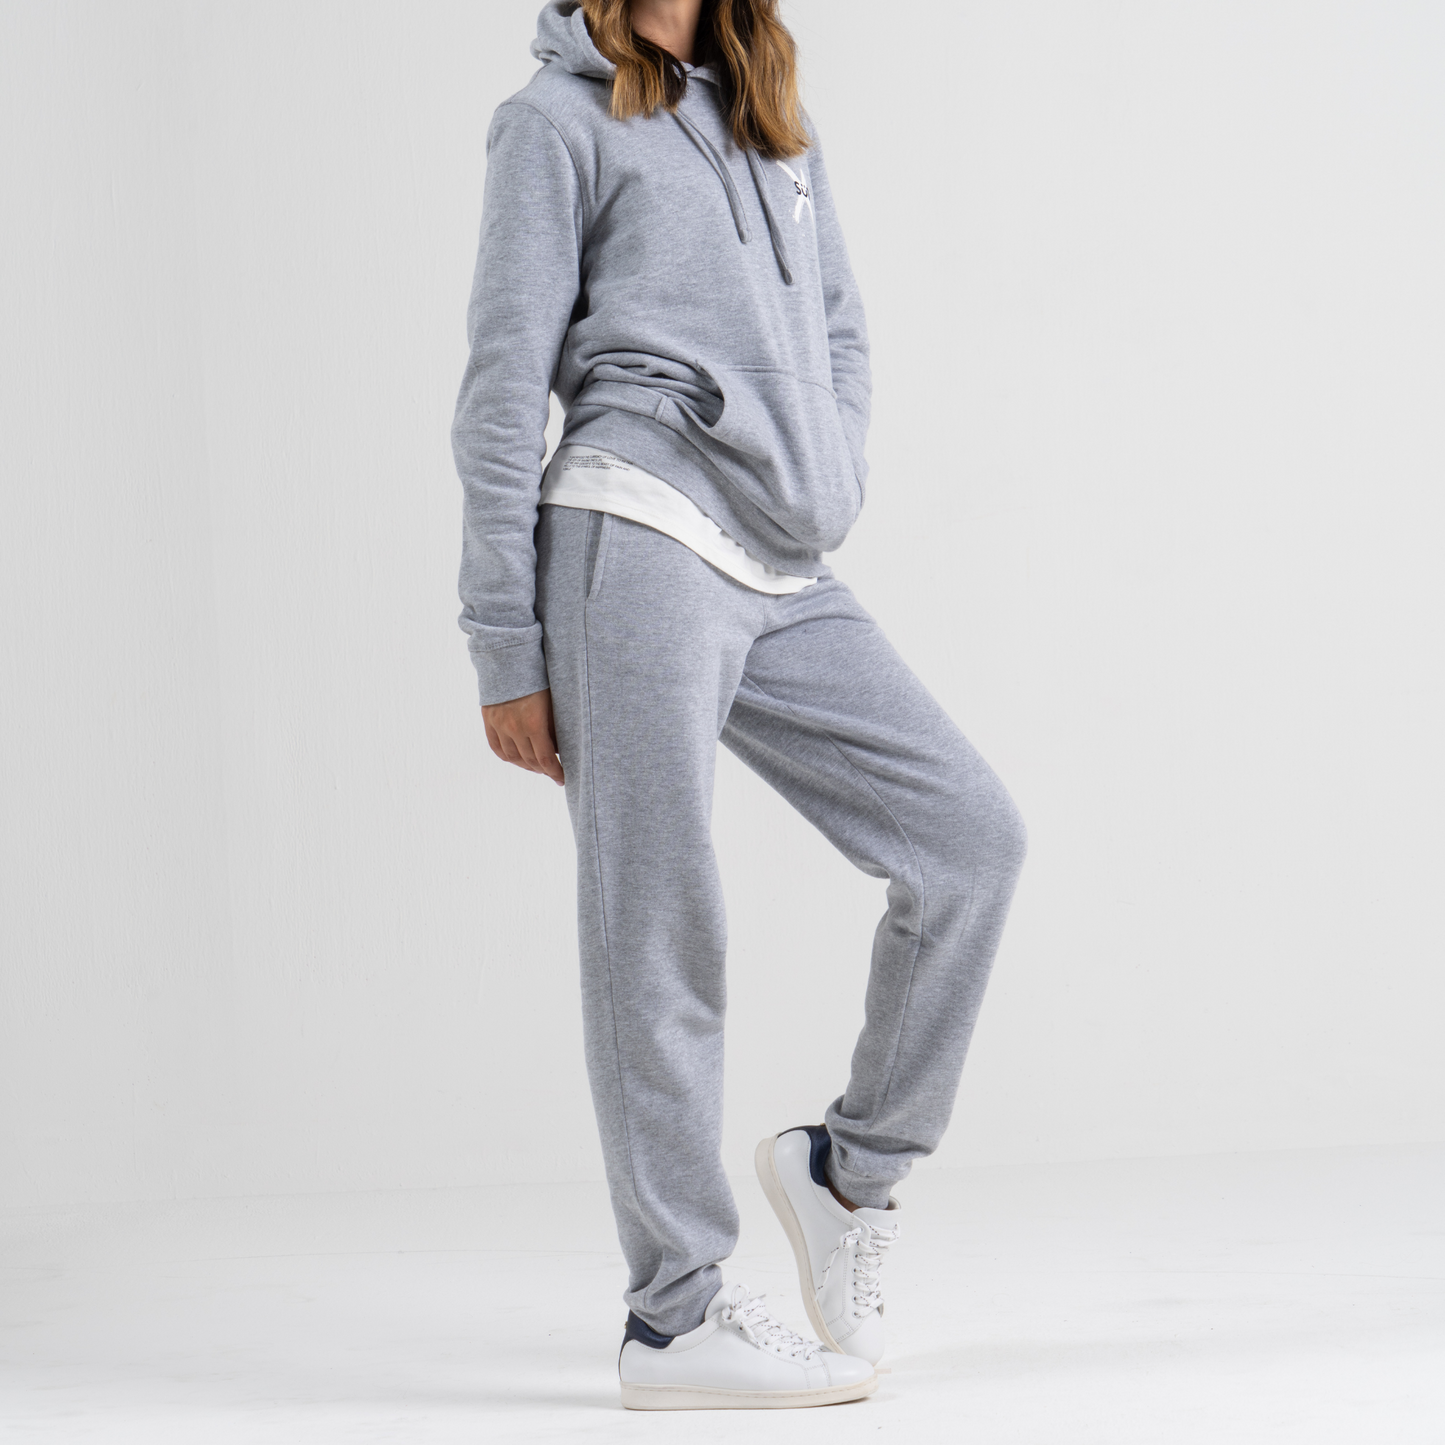 Woman wearing grey sport trousers SU1 clothing brand